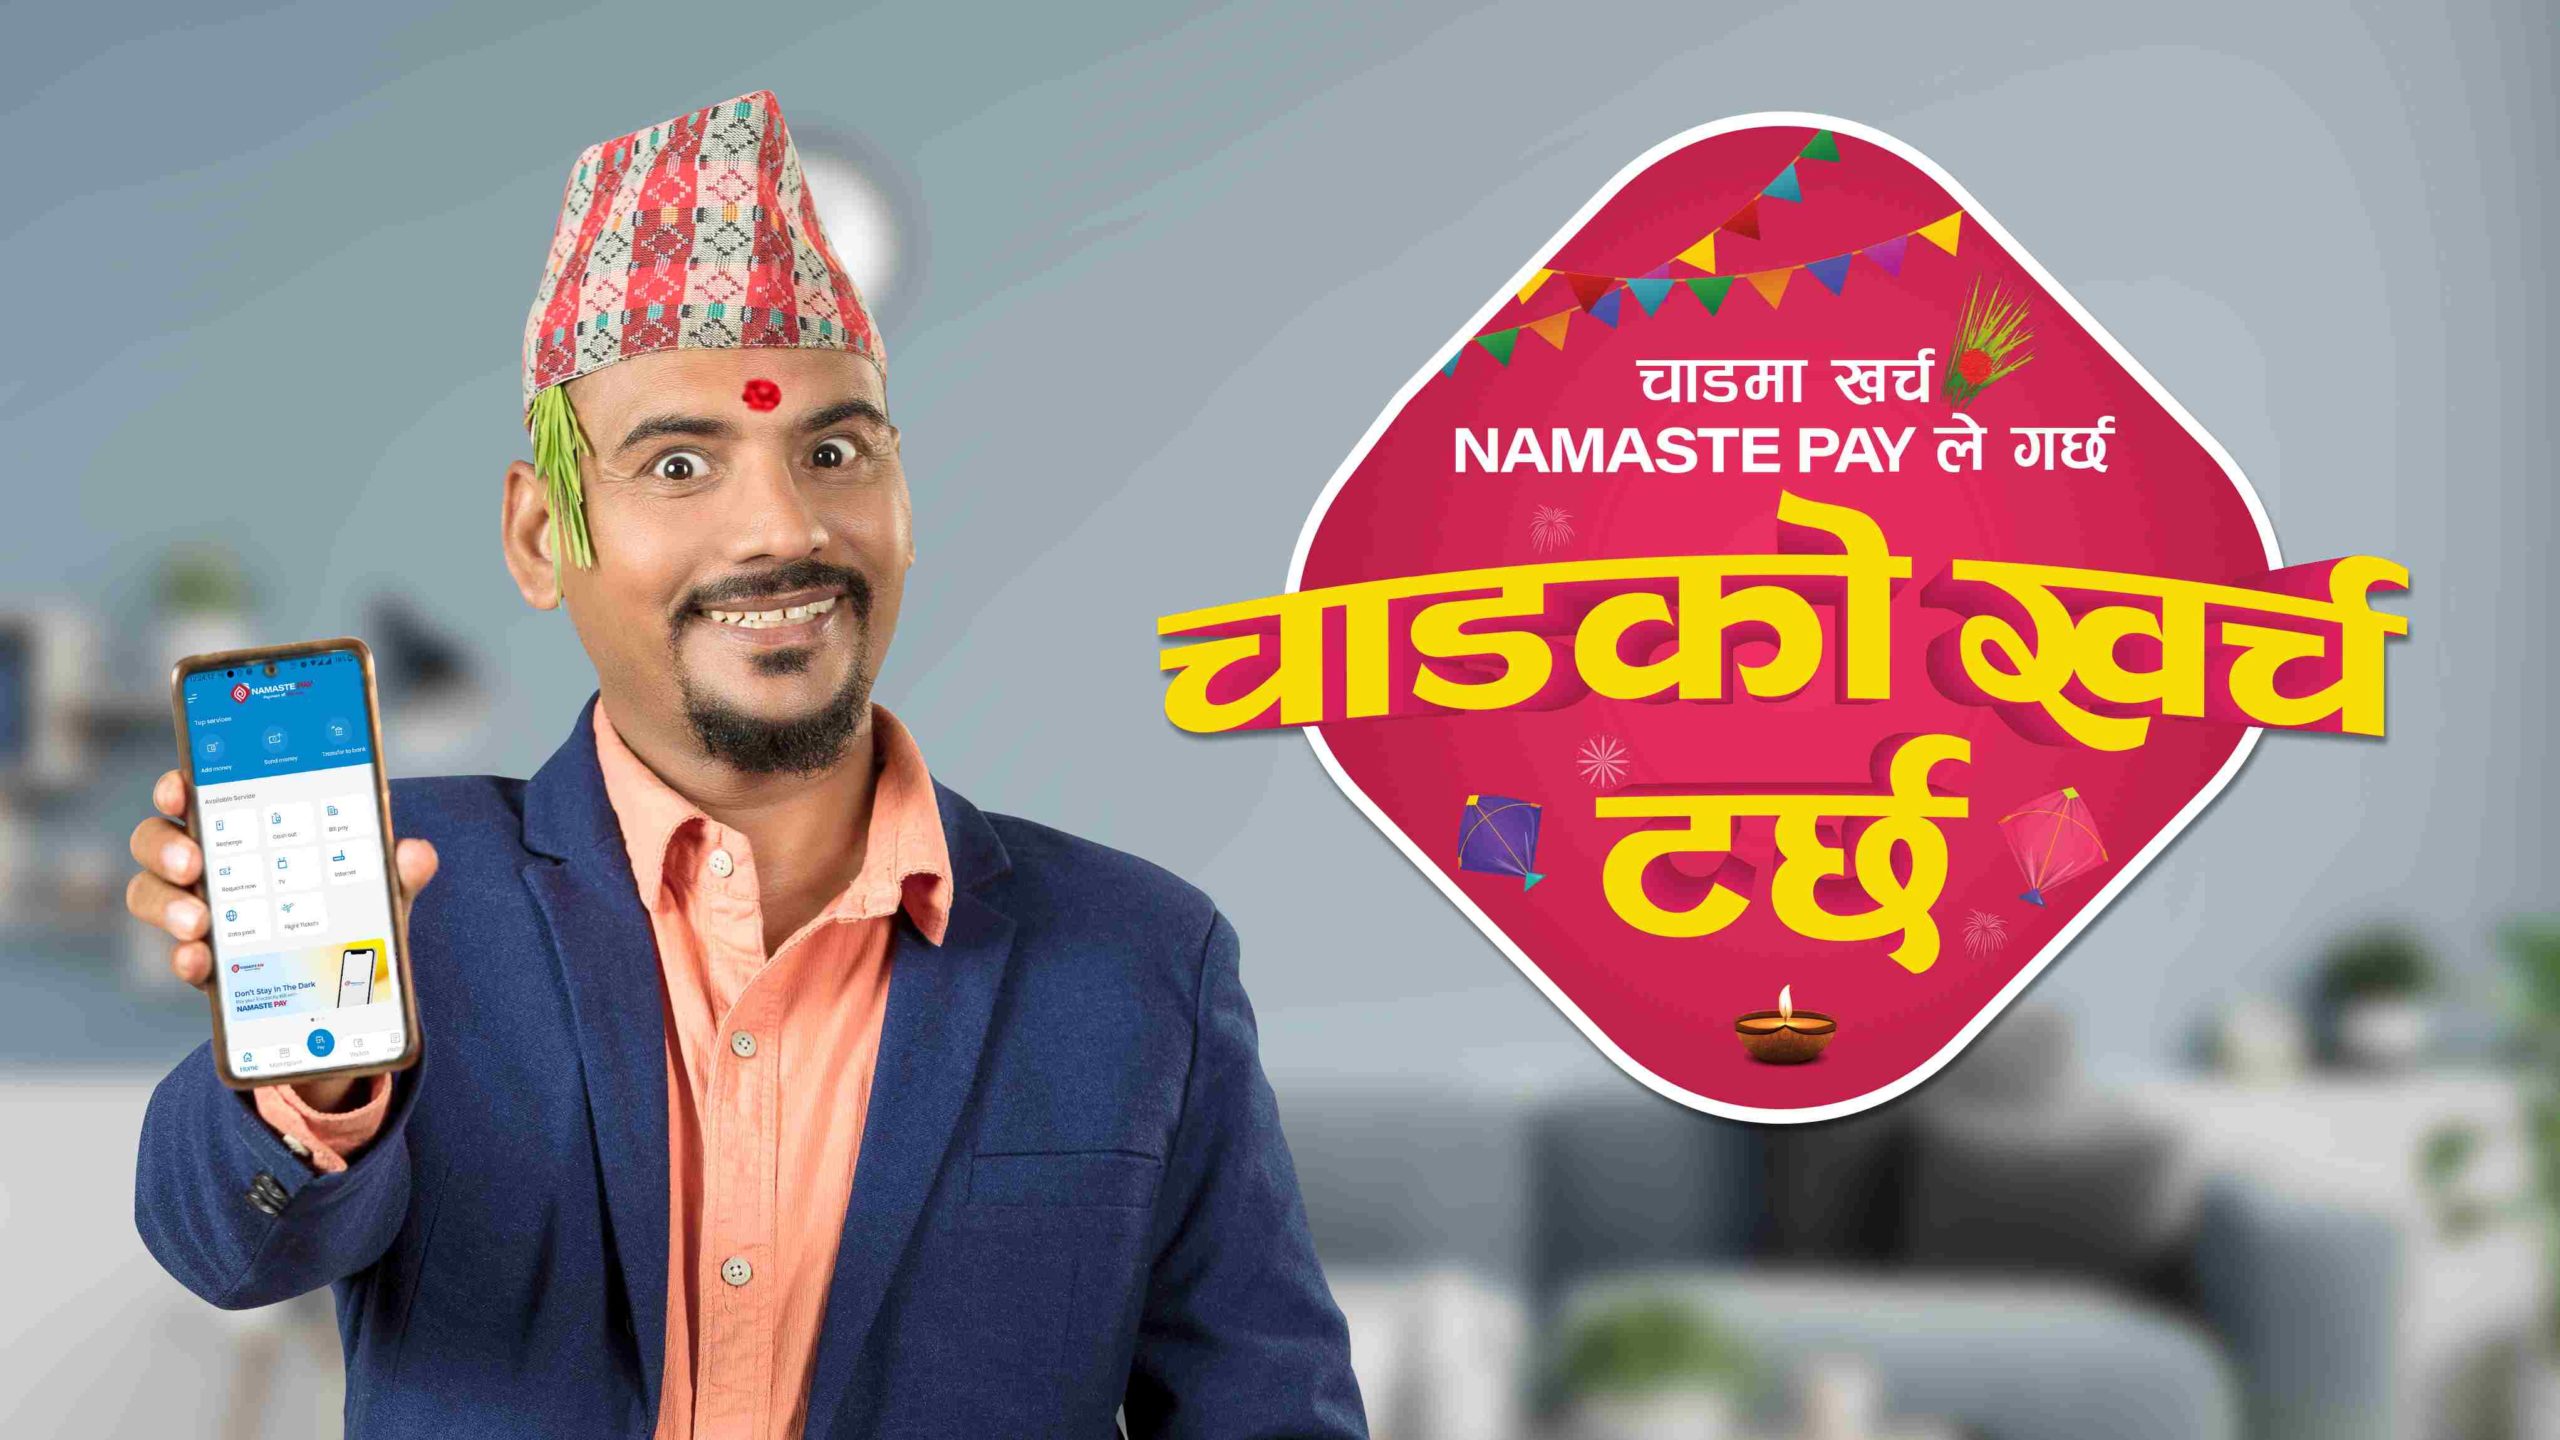 Namaste Pay festive campaign 2079